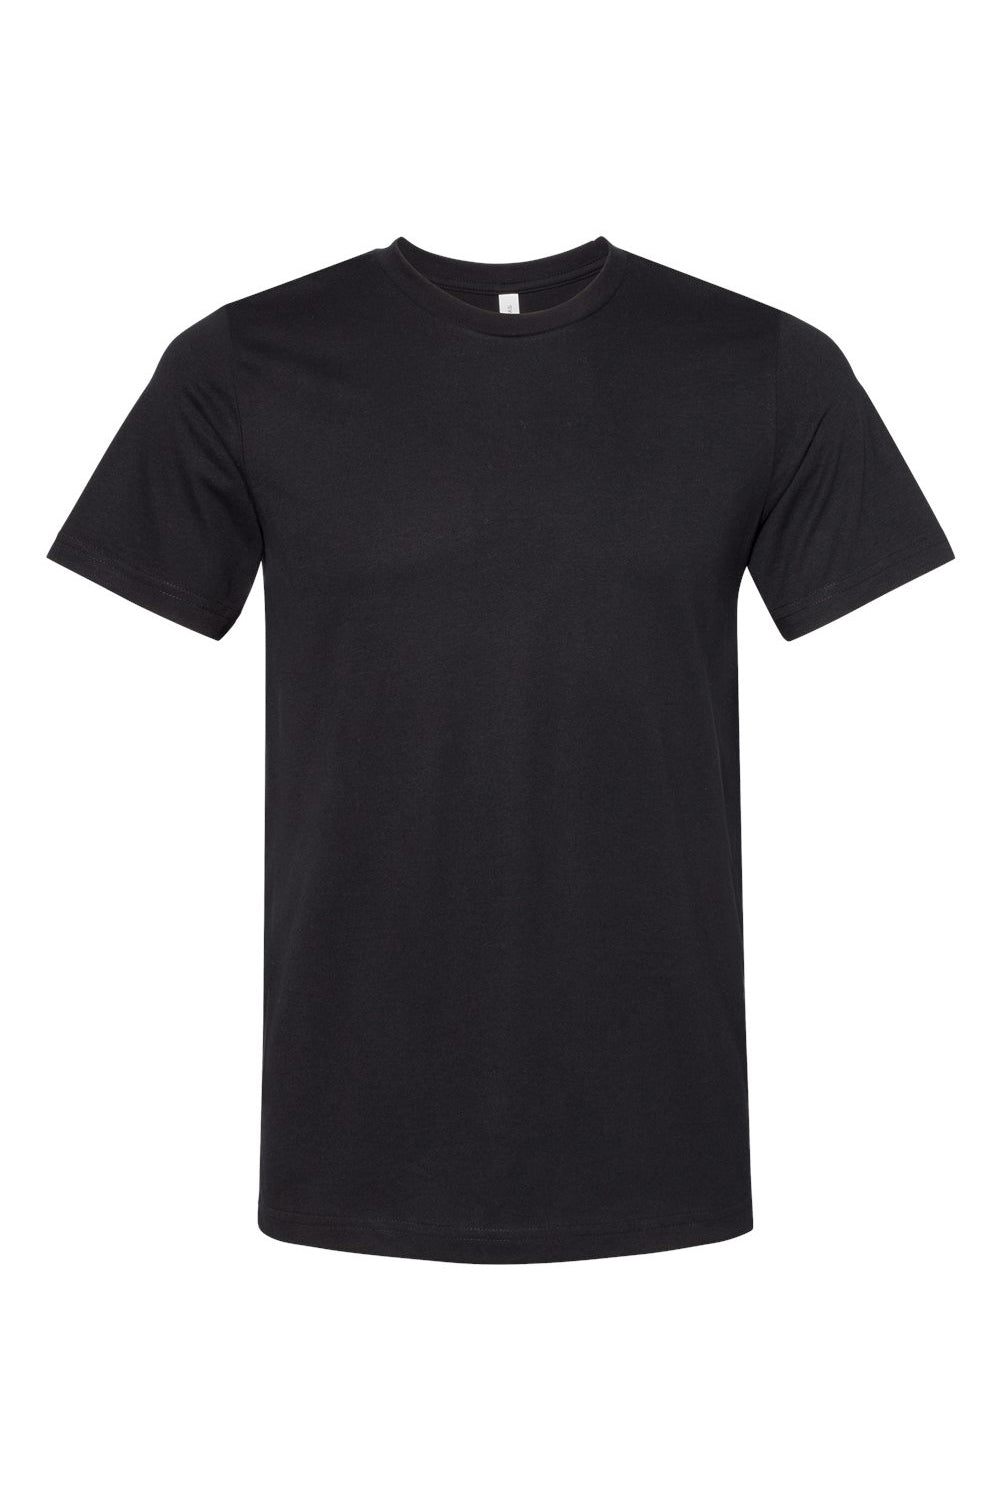 Bella + Canvas BC3301/3301C/3301 Mens Jersey Short Sleeve Crewneck T-Shirt Solid Black Flat Front